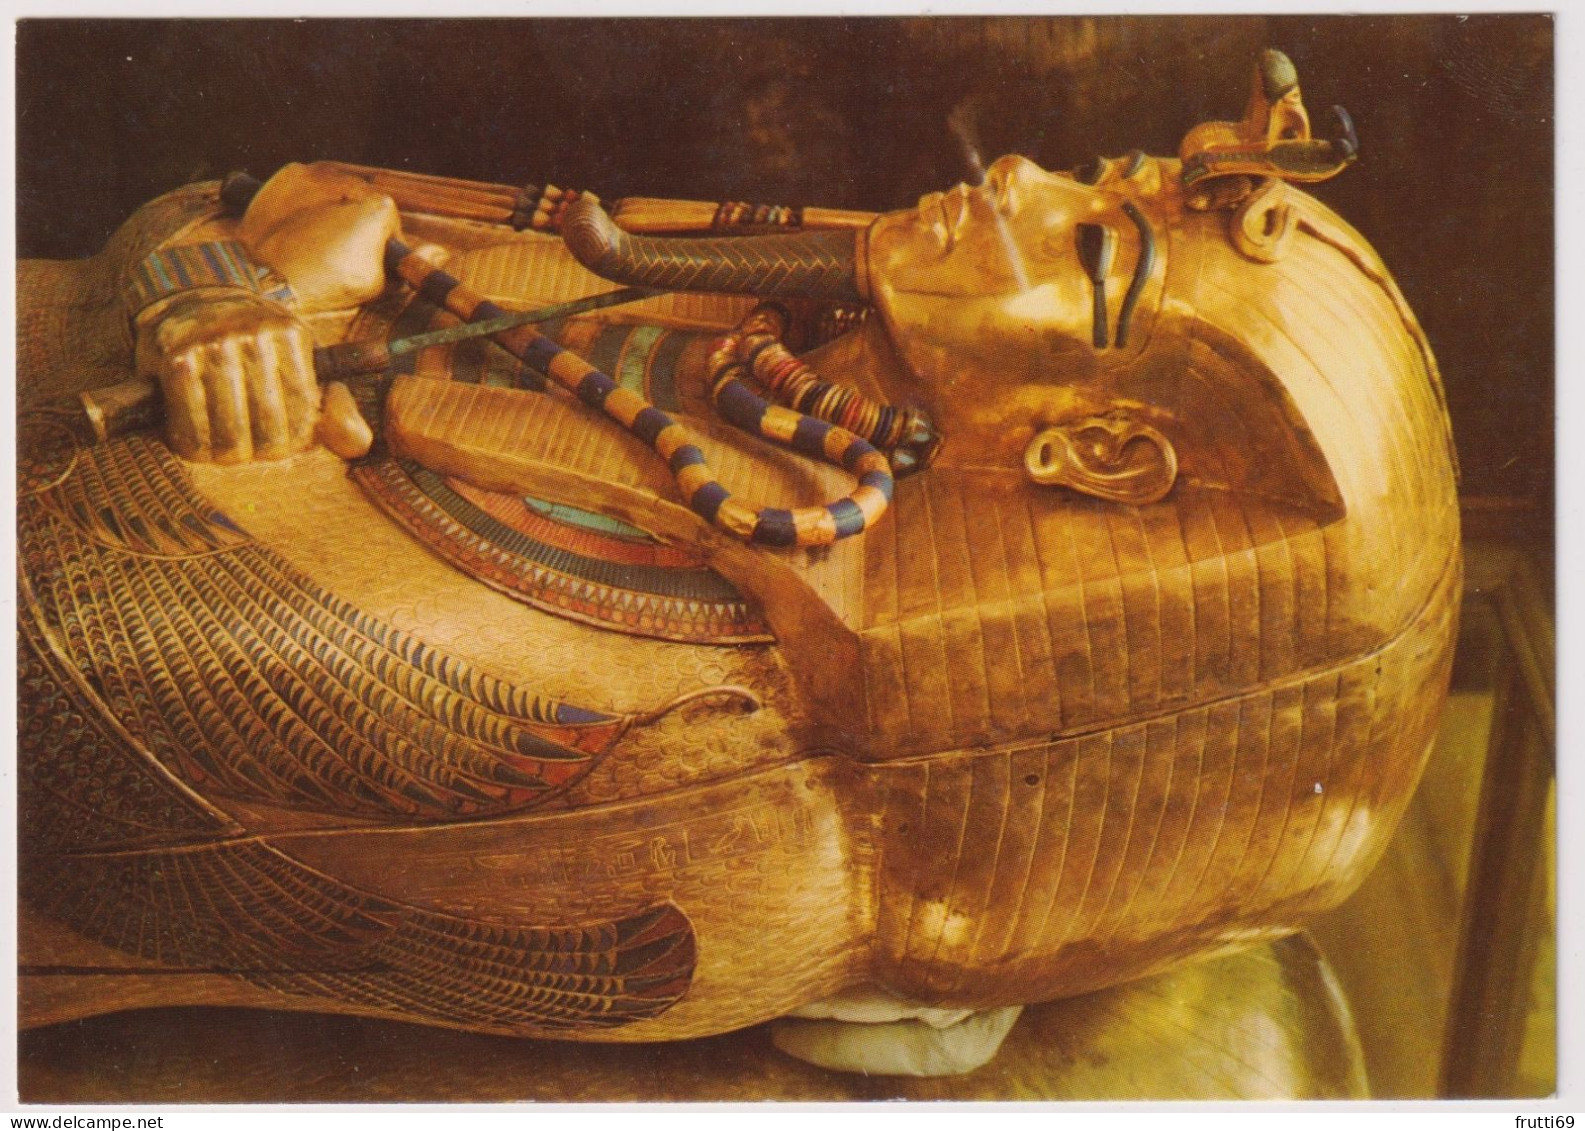 AK 198144 EGYPT - Cairo - Cairo Egyptian Museum - Tut Ankh Amun's Treasures - Second Coffin - Museen